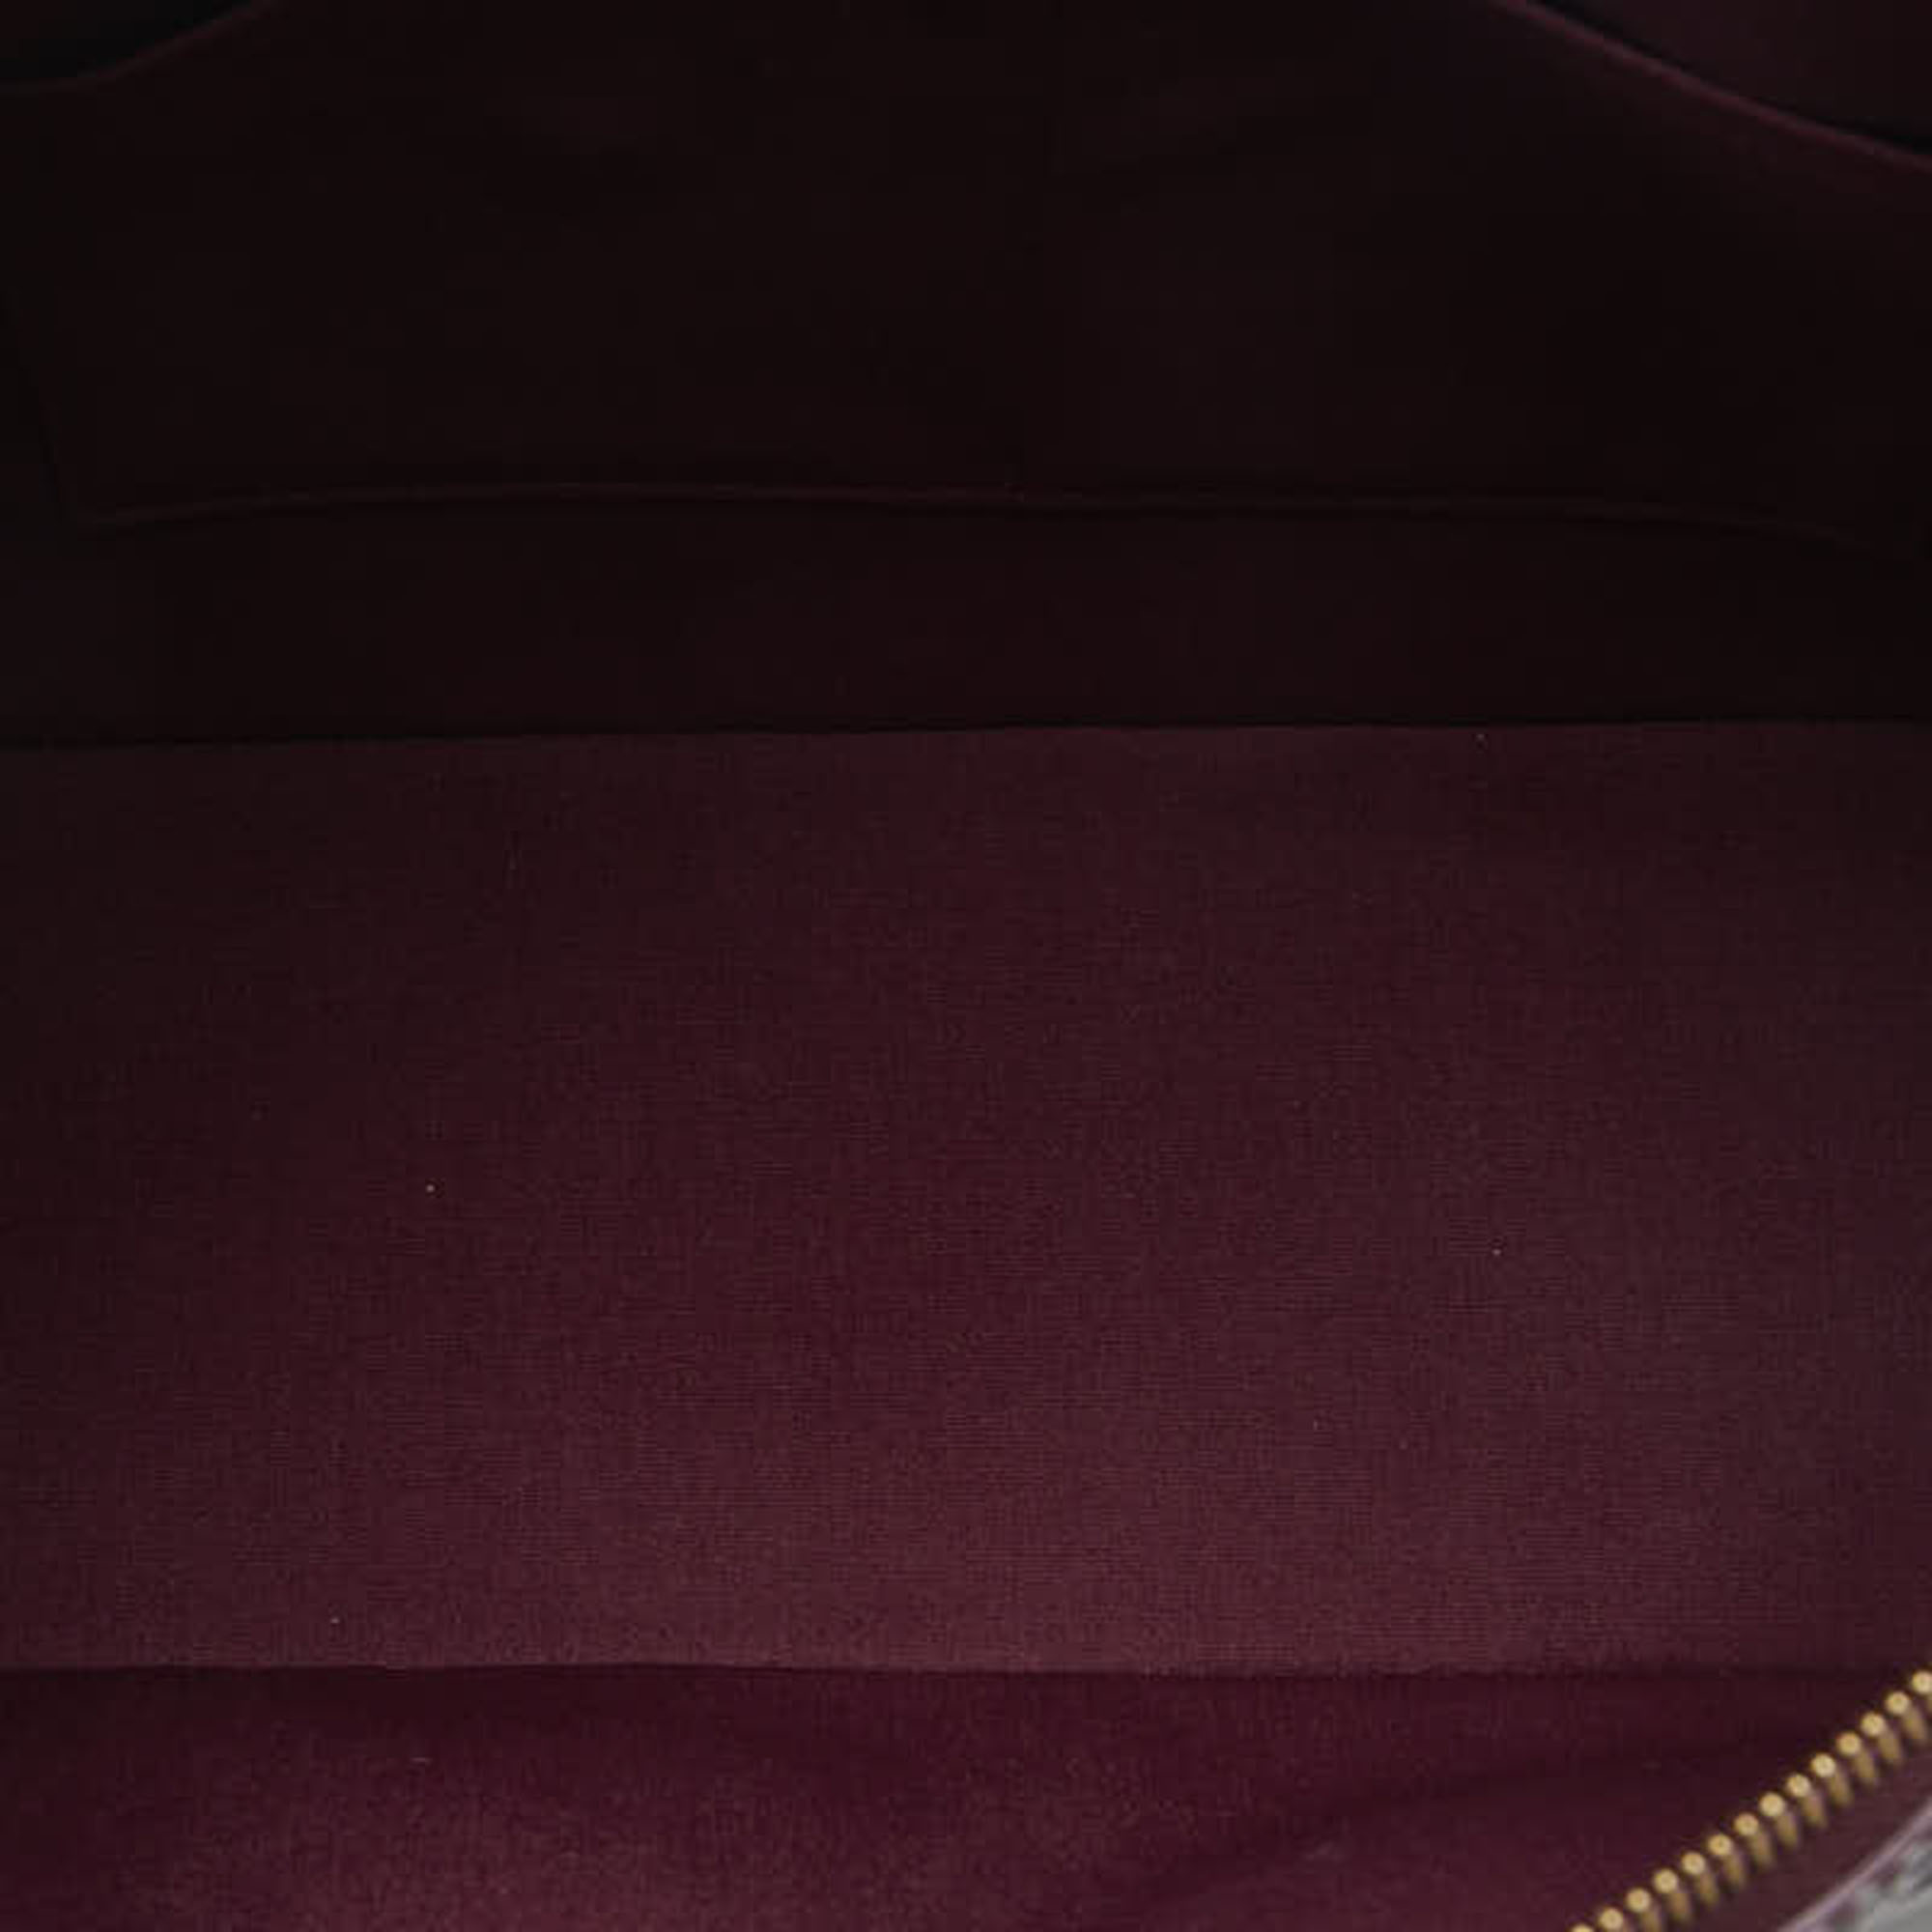 Louis Vuitton Rose Gold Monogram Vernis Avalon Zip Tote